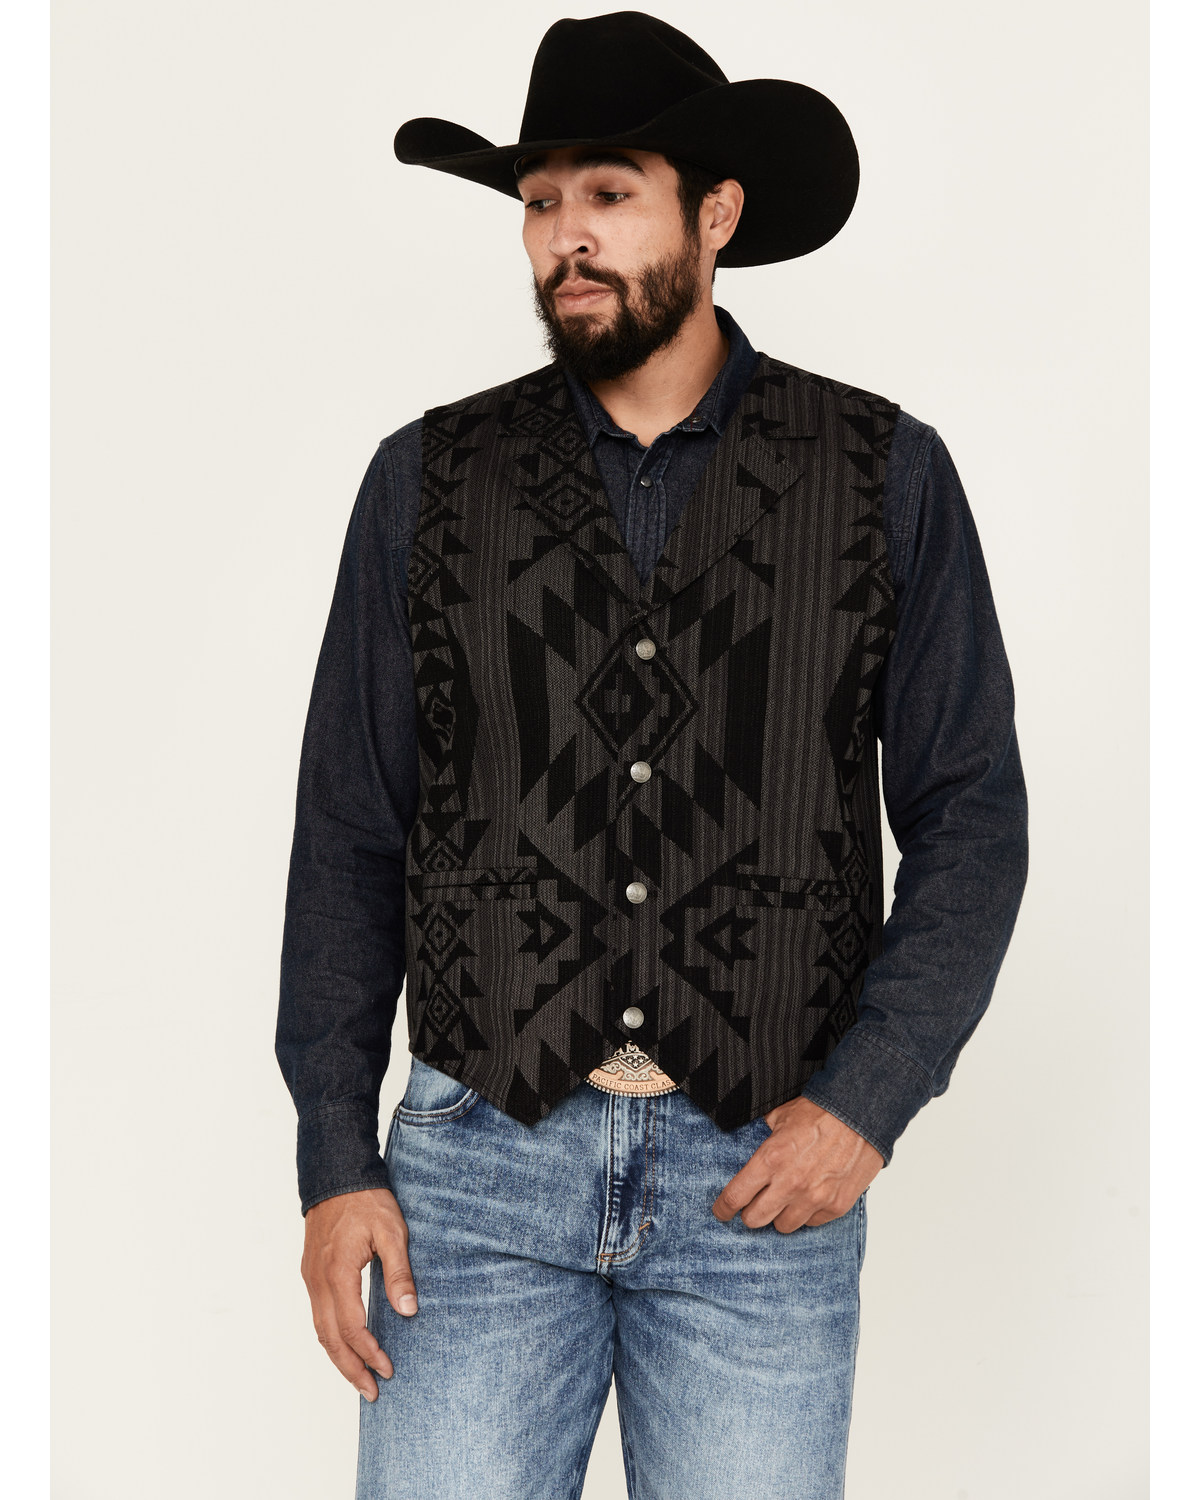 Cody James Men's Yuma Southwestern Jacquard Vest